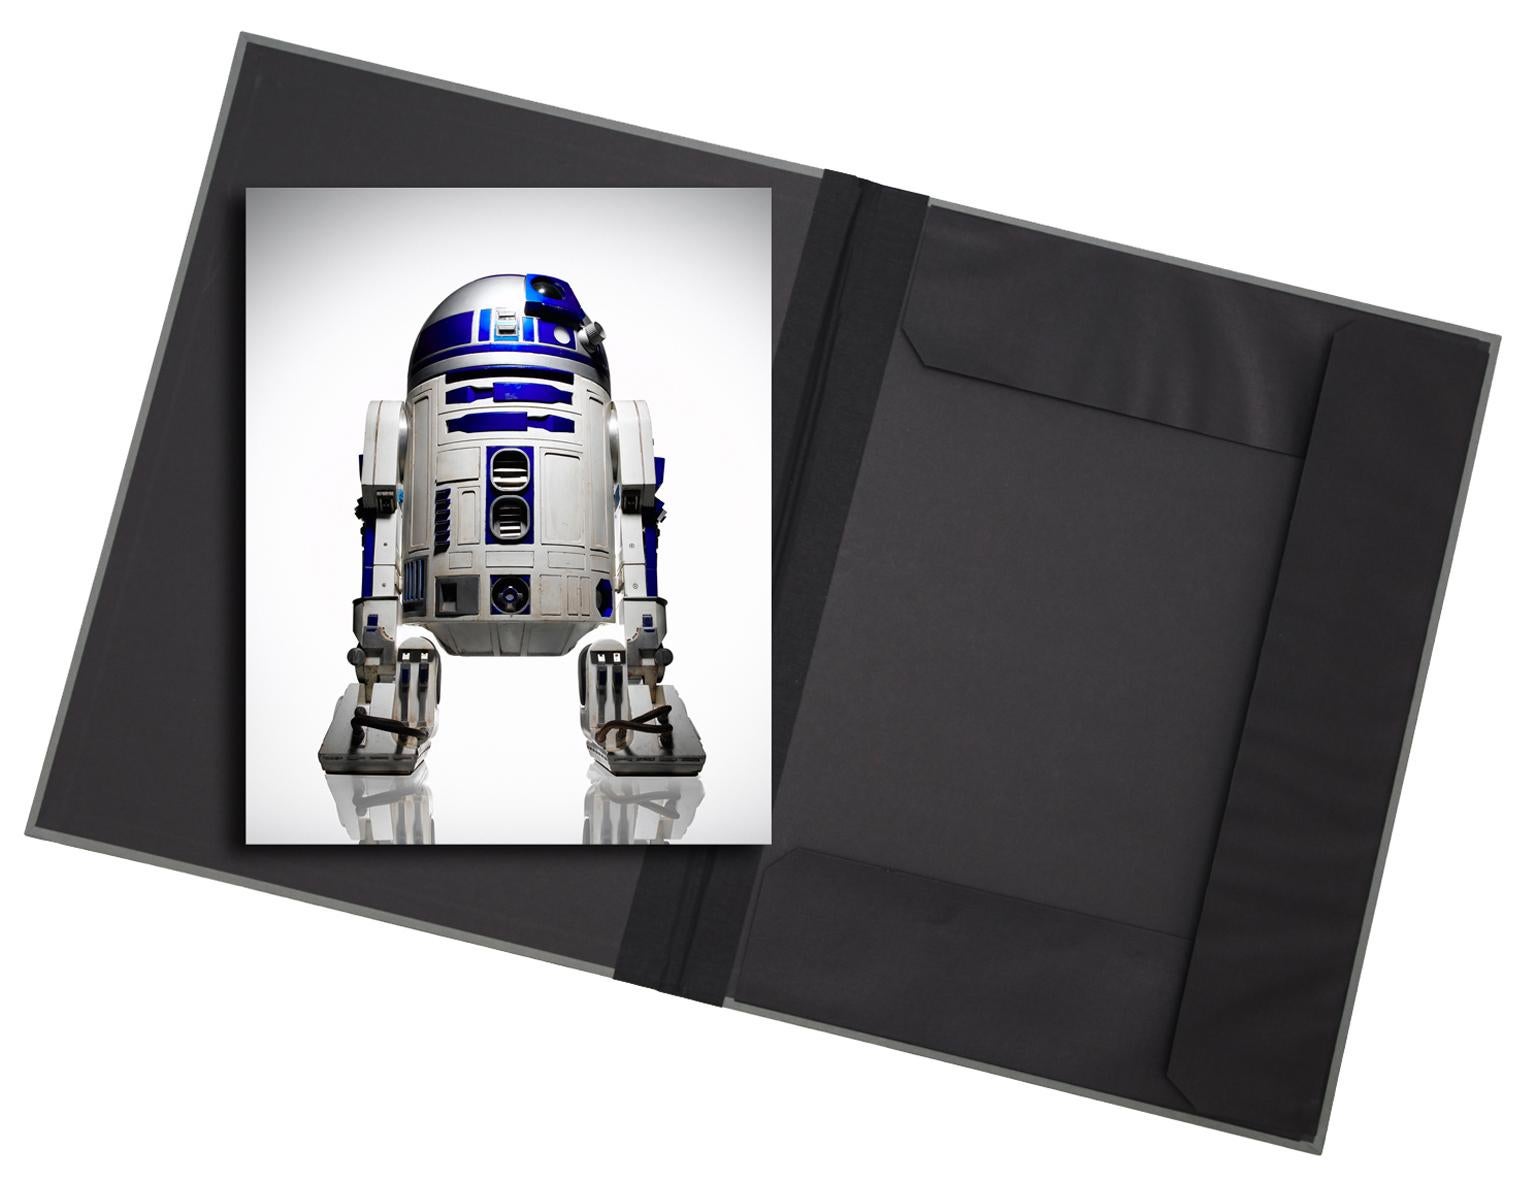 Tom Schierlitz Color Photograph - Star Wars (R2-D2) - photograph in classic archival artwork portfolio gift binder